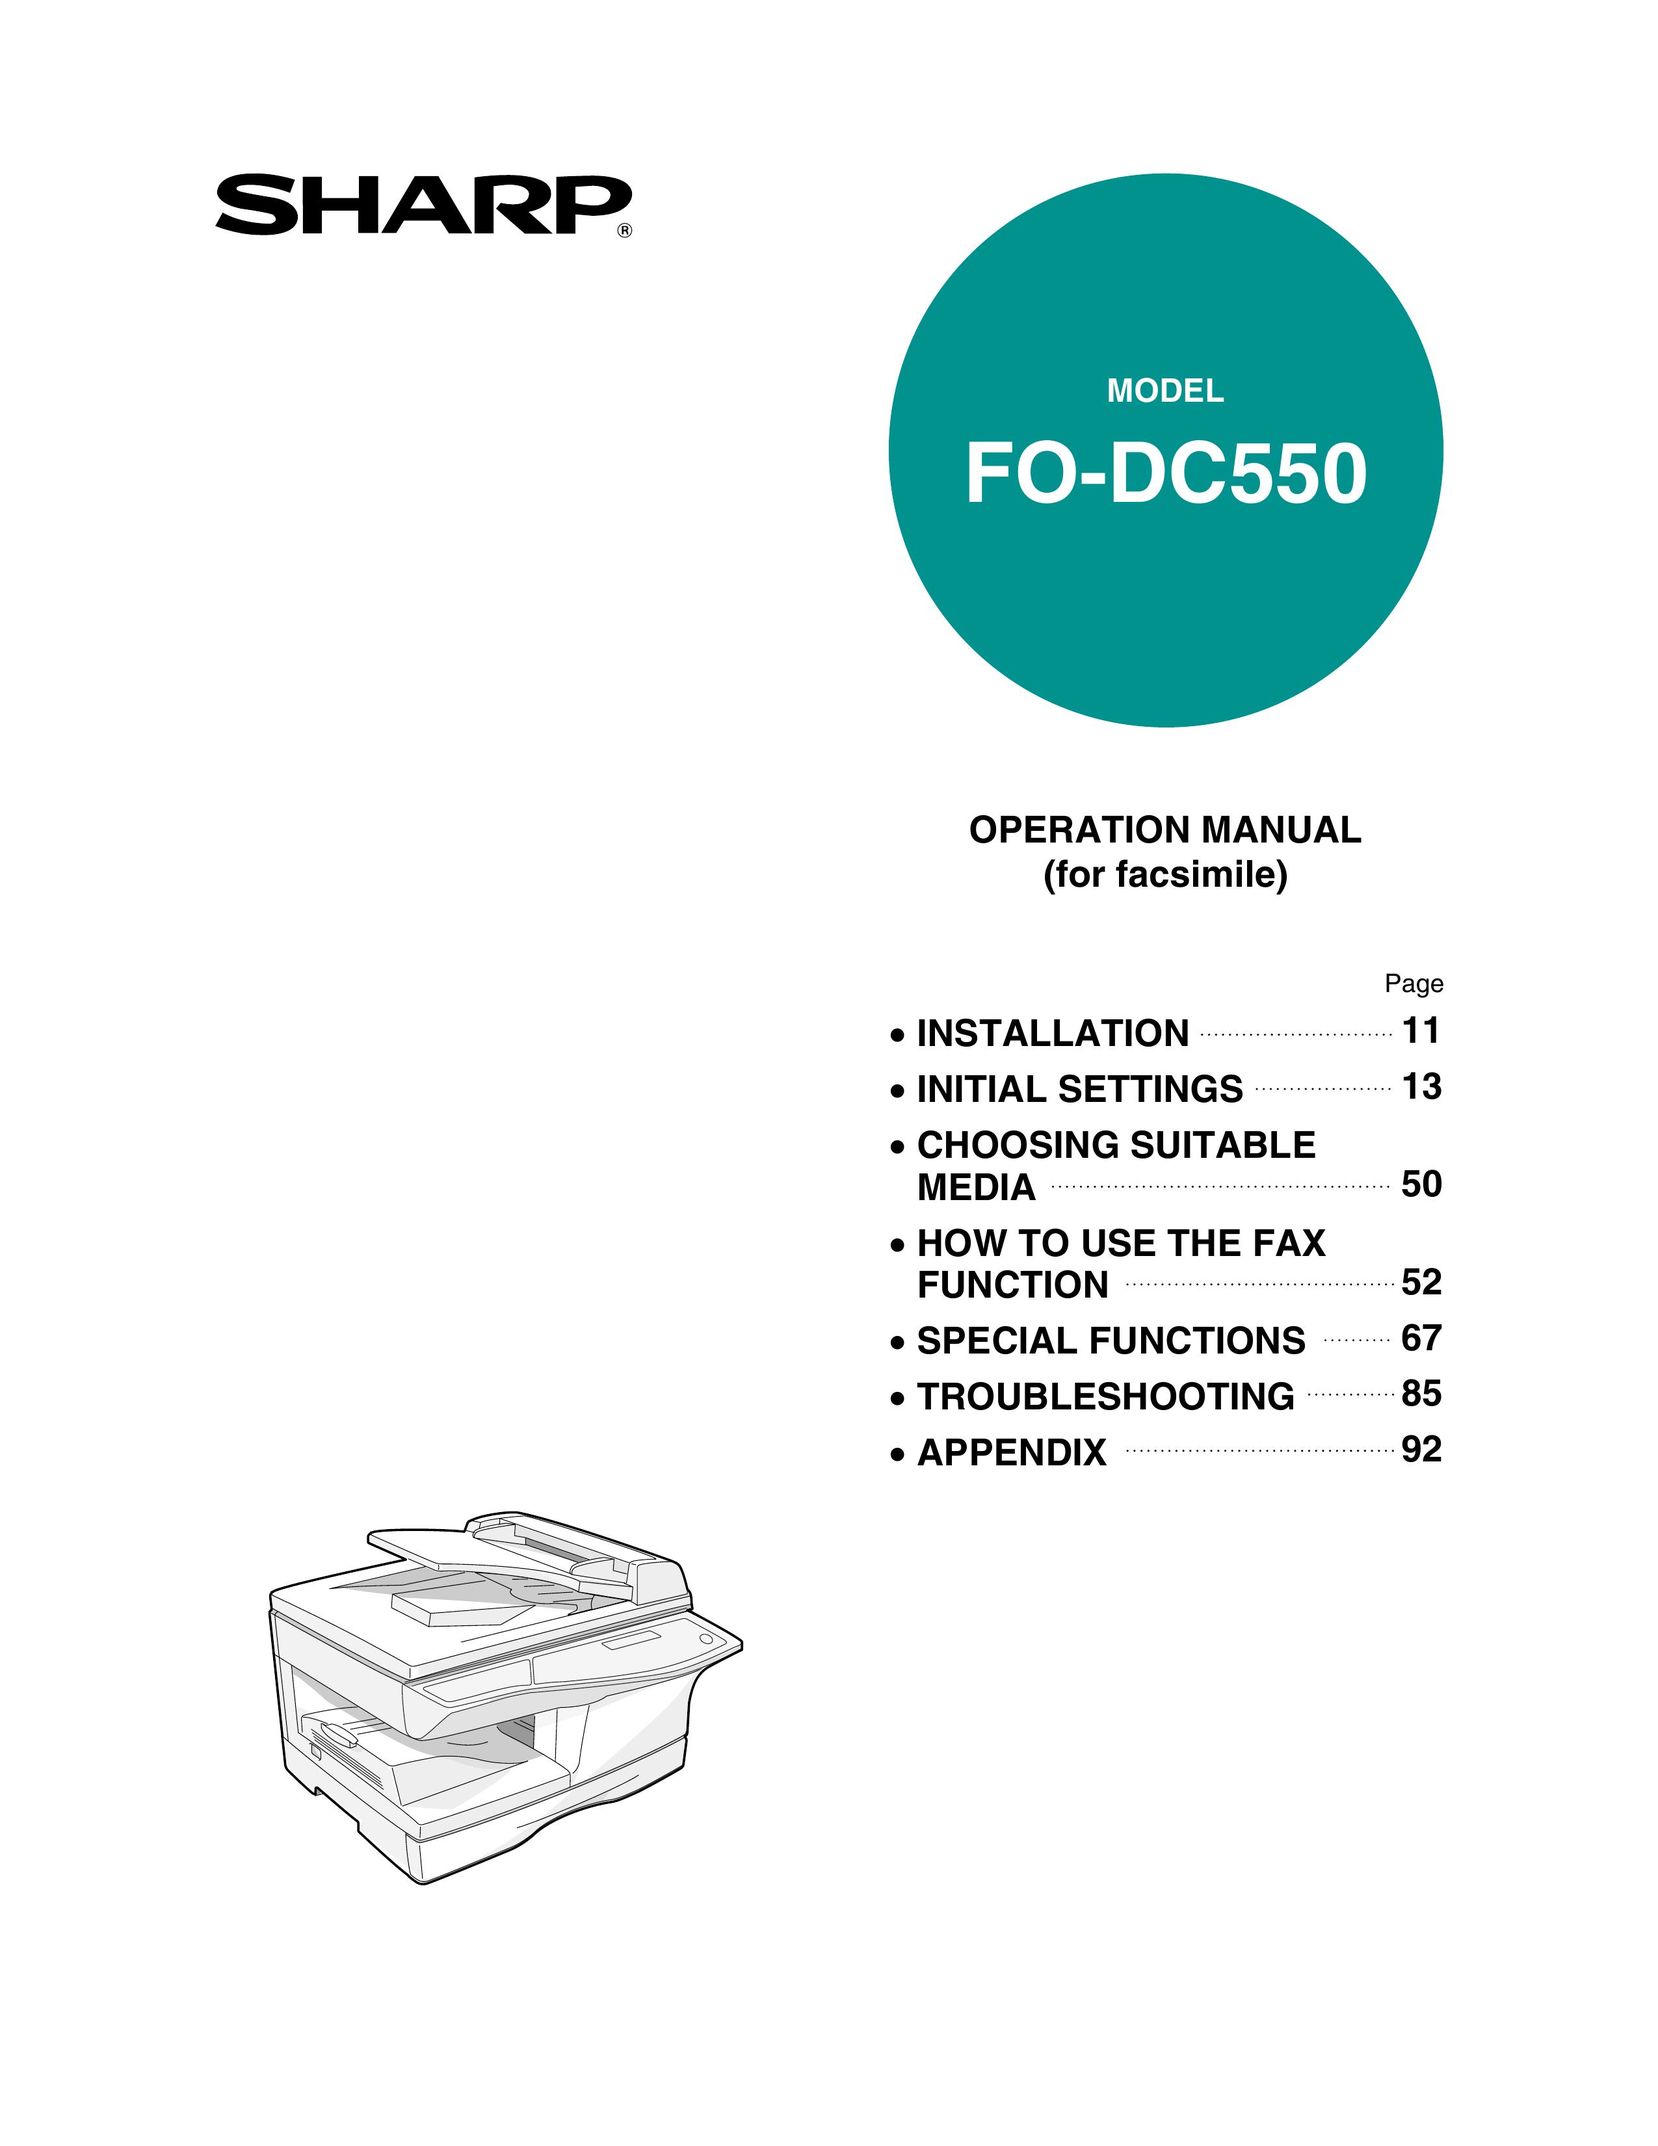 Sharp FO-DC550 Fax Machine User Manual